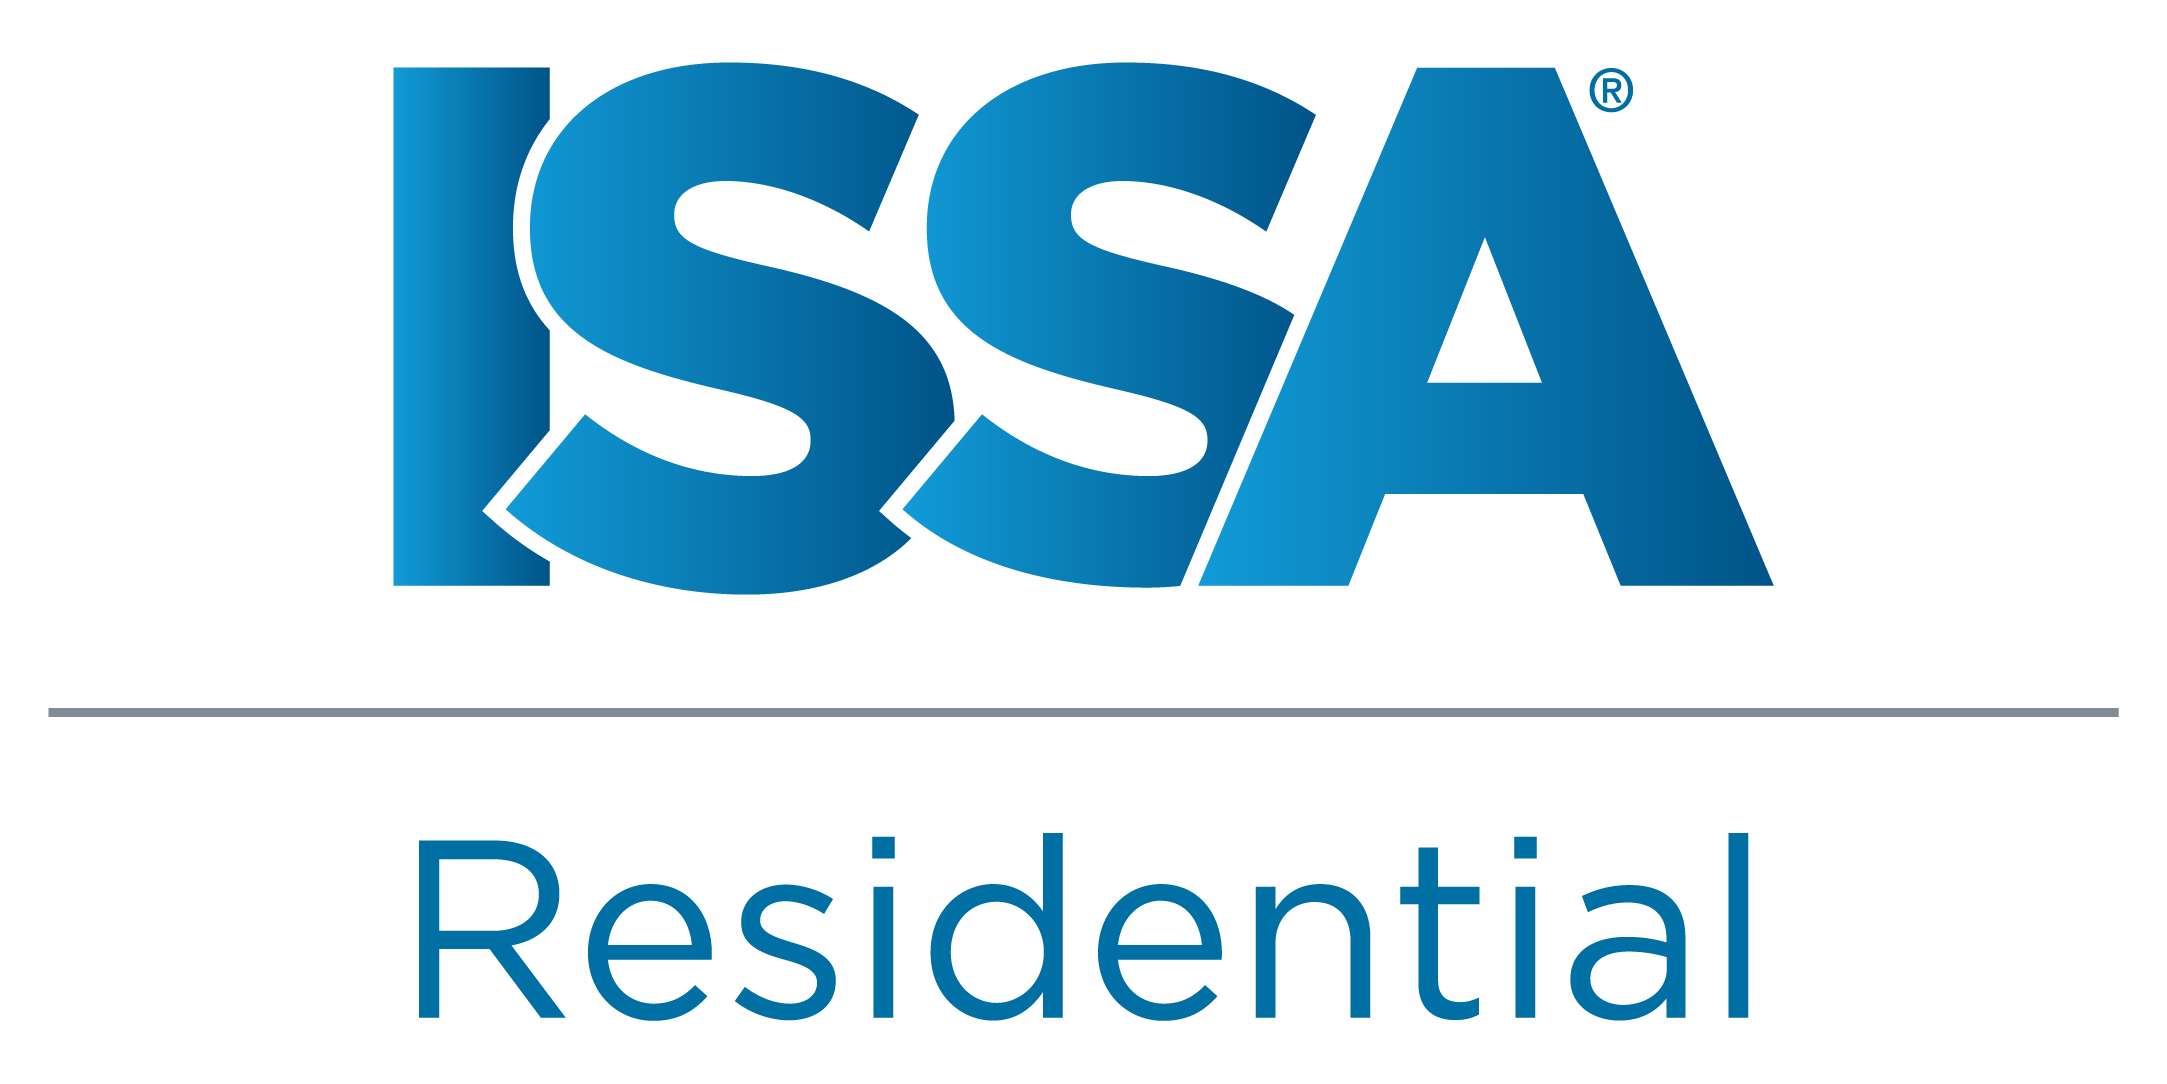 ISSA Residential